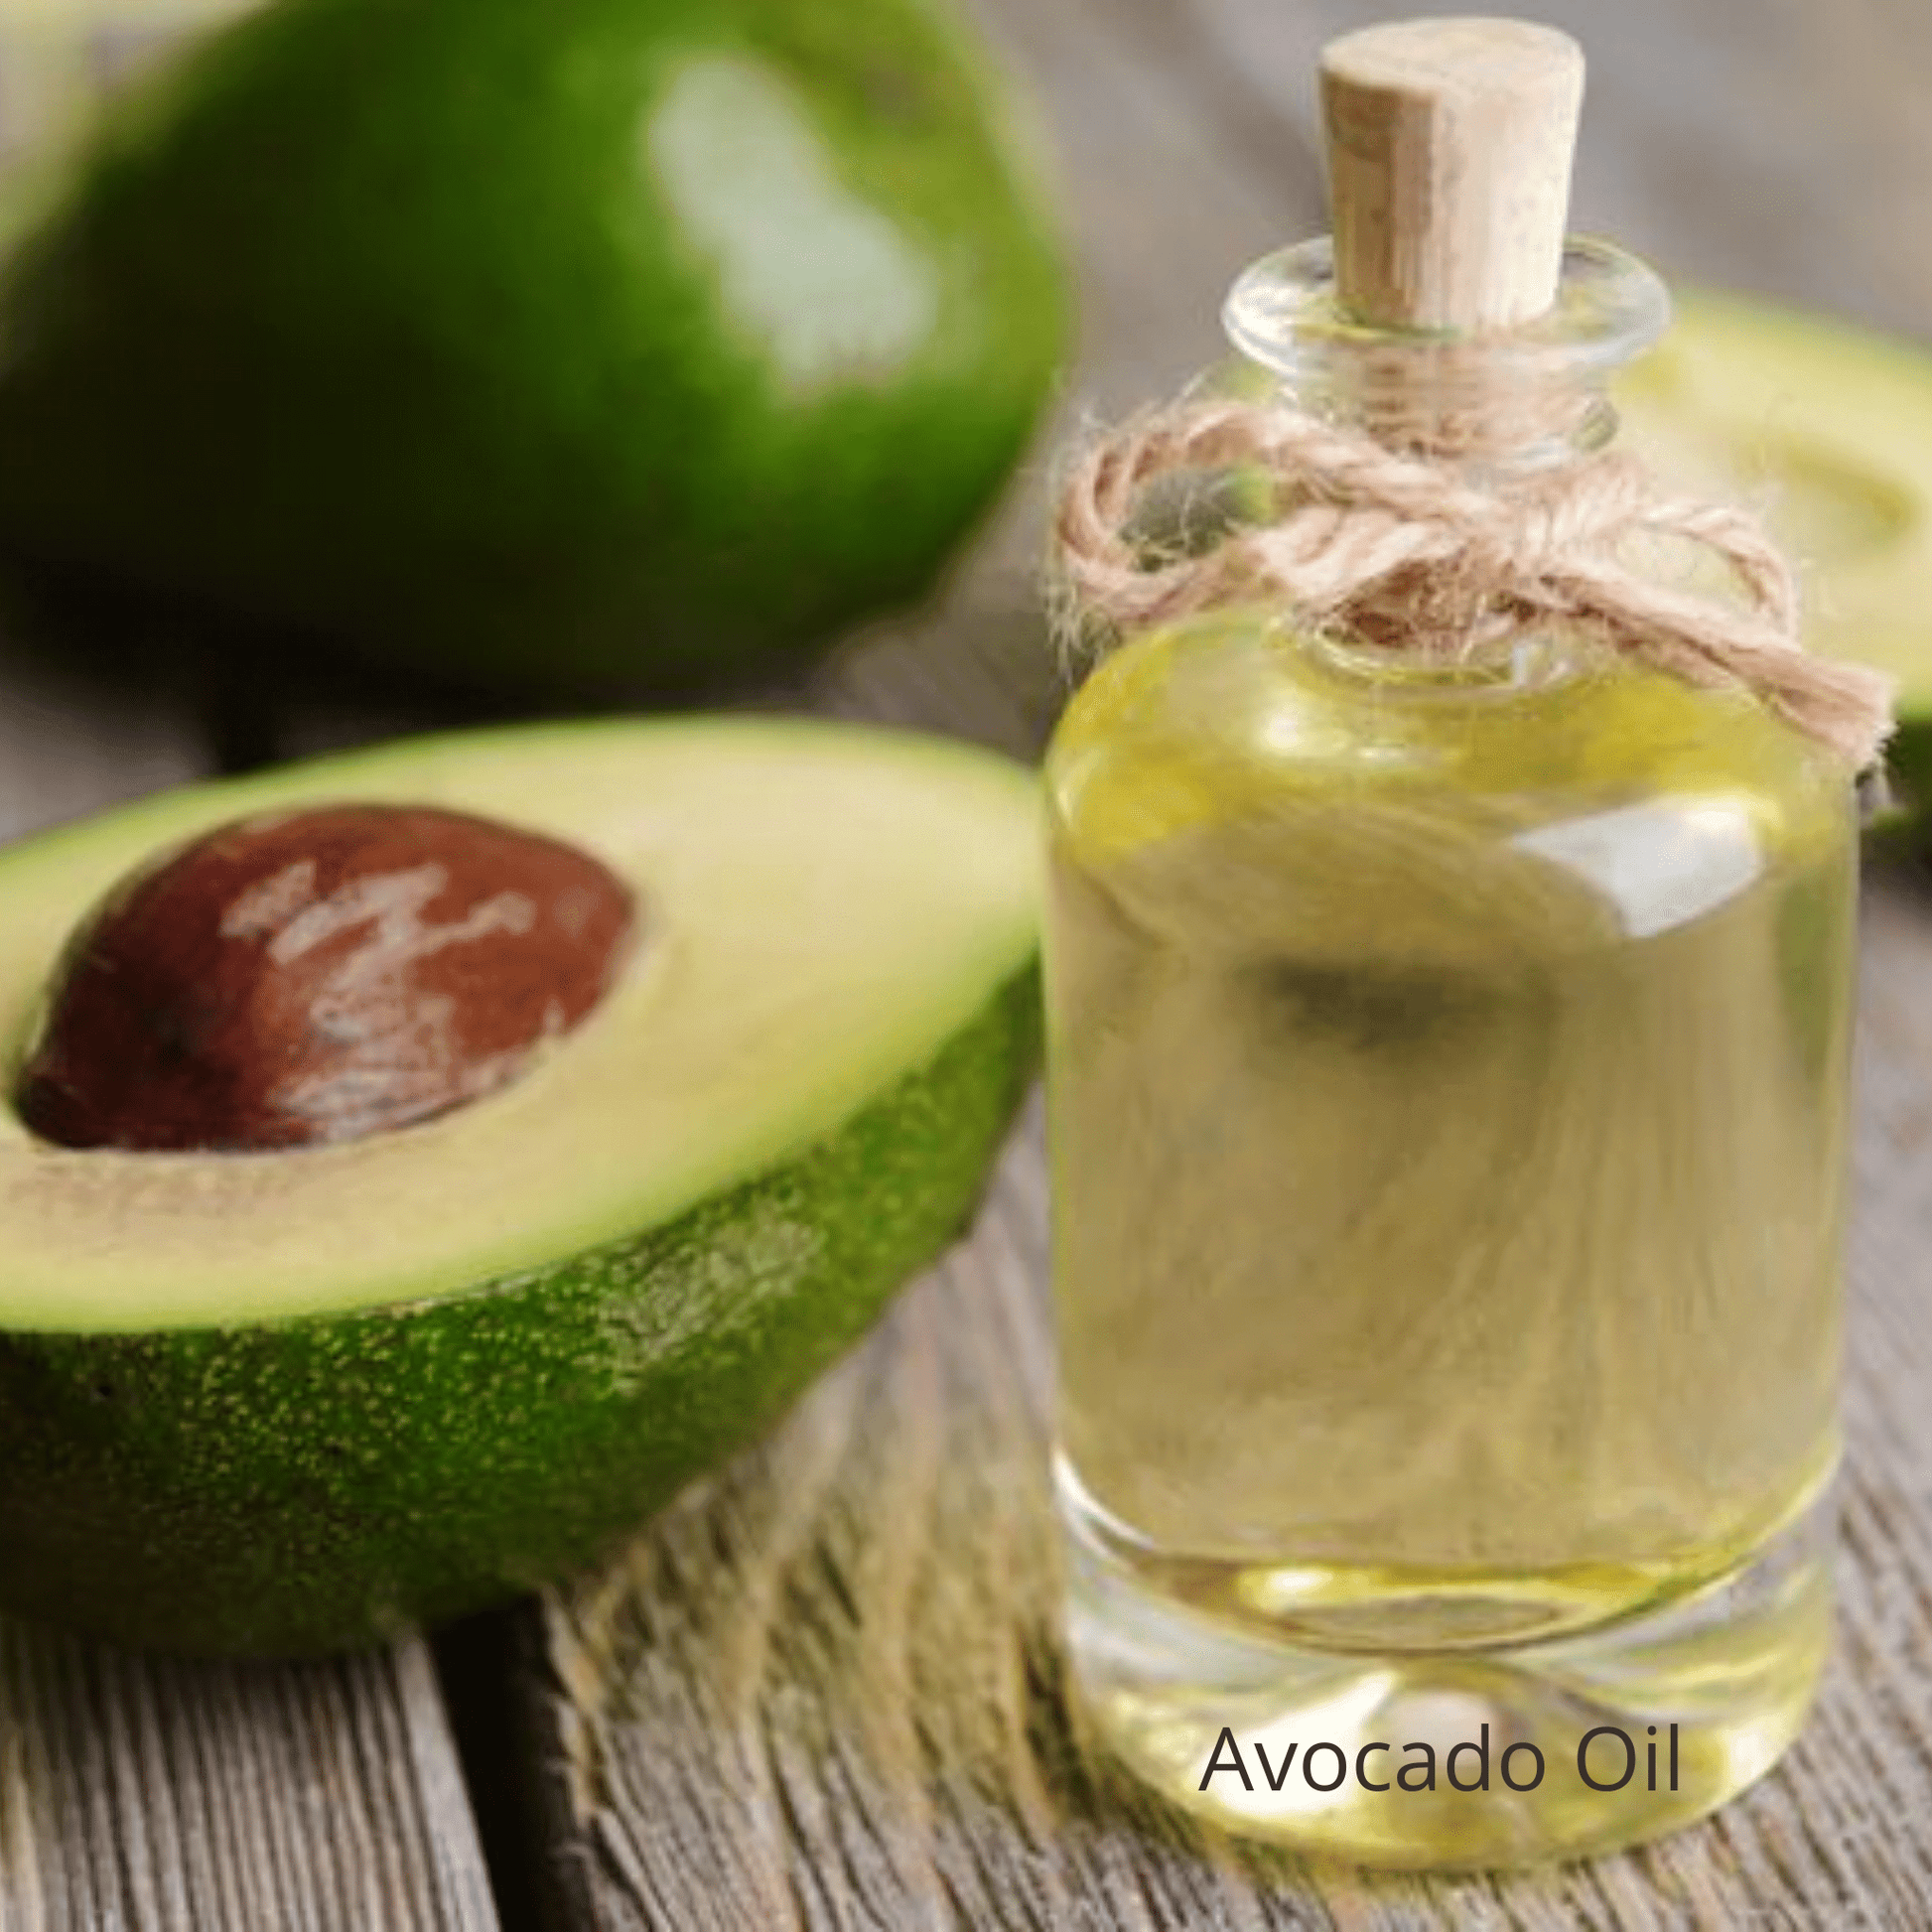 avocado oil in Be Green Bath and Body Body Oil Trial